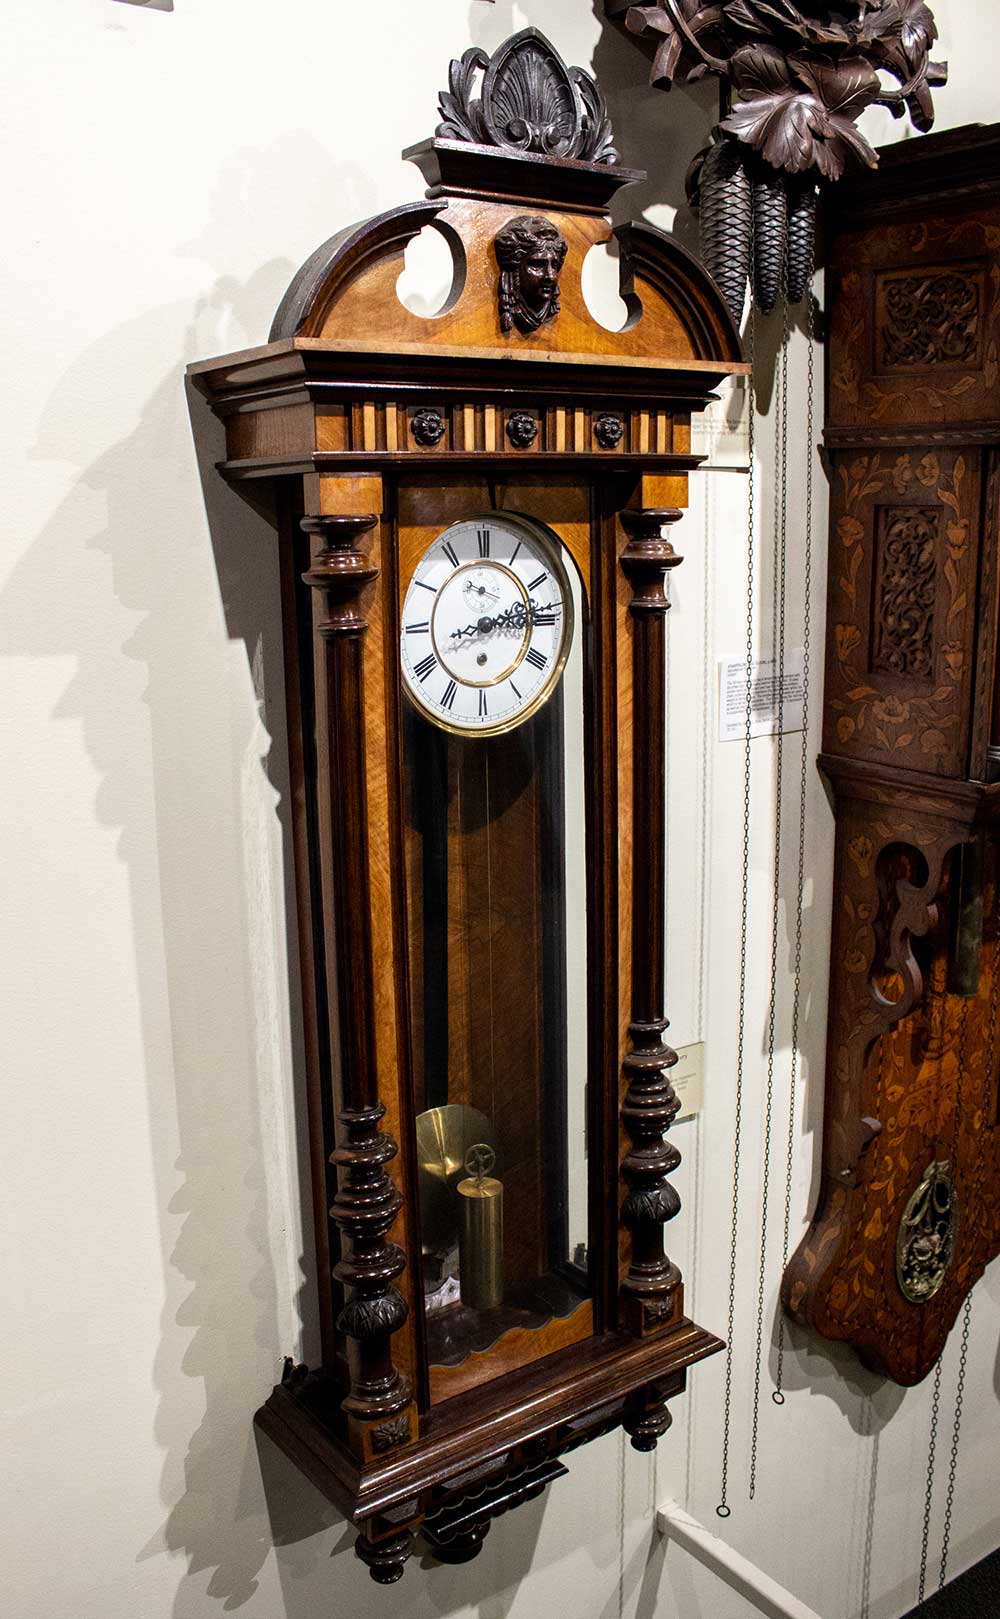 Late 19th-century Vienna regulator clock 